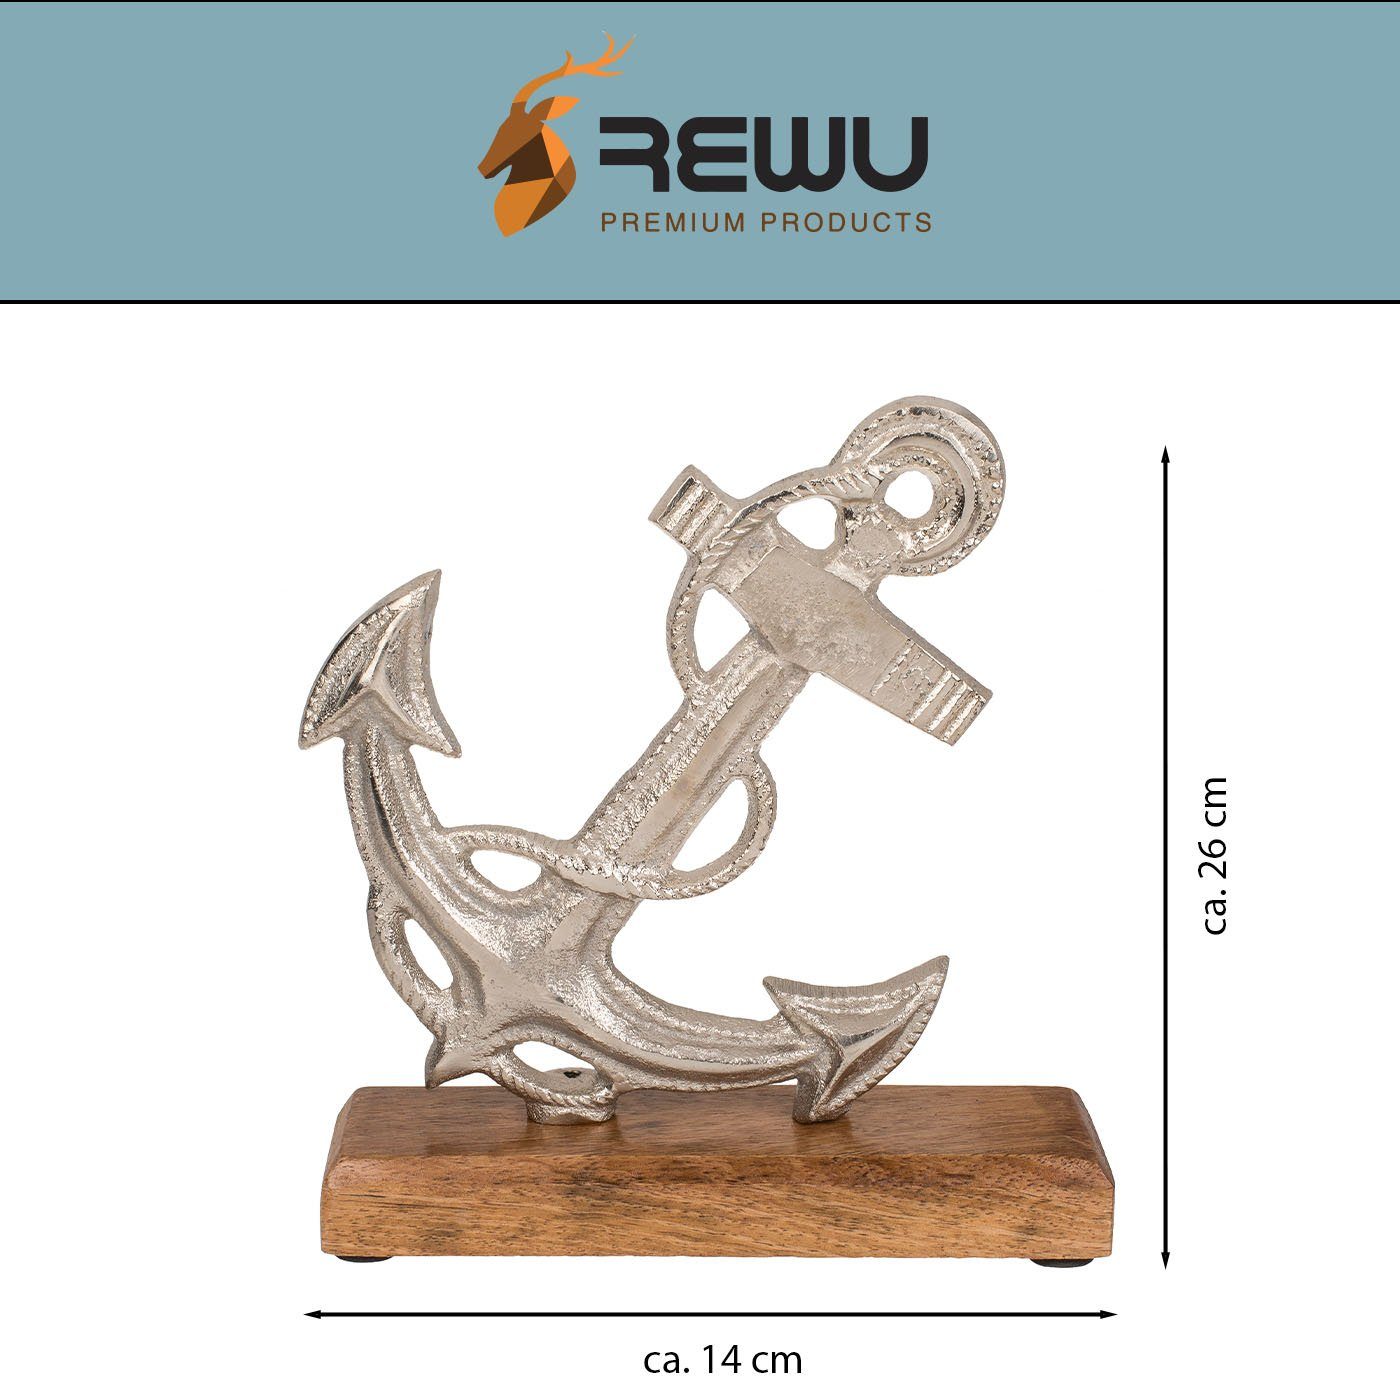 Metall auf Metall Silberfarbener ReWu Holz Dekoobjekt Anker Schriftzug Mit Seil Fuß